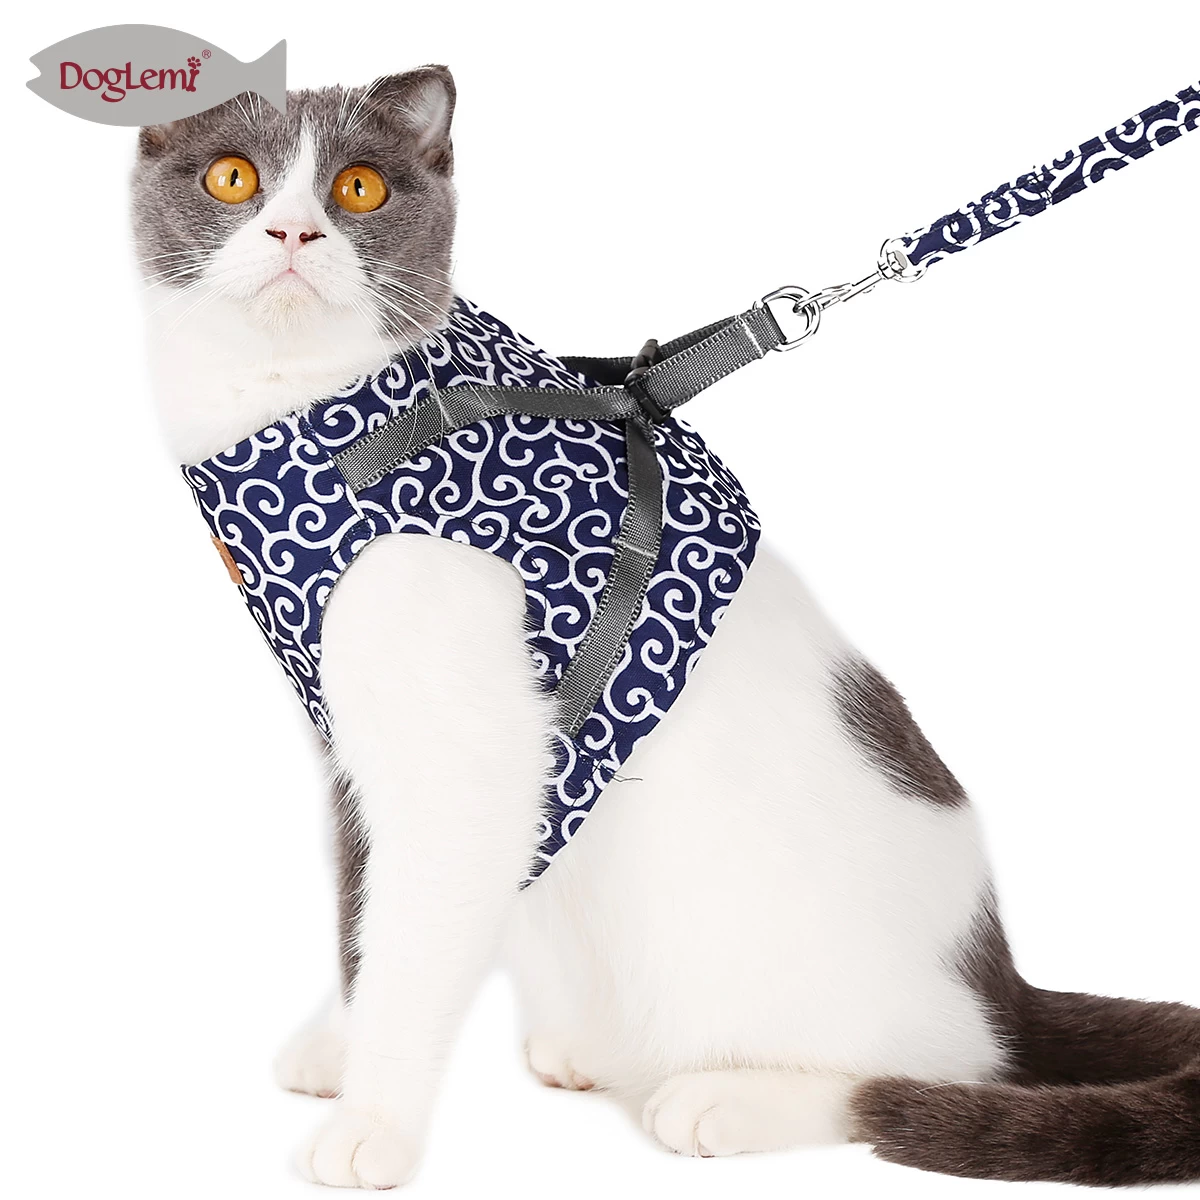 Flower Design Cat Harness Set